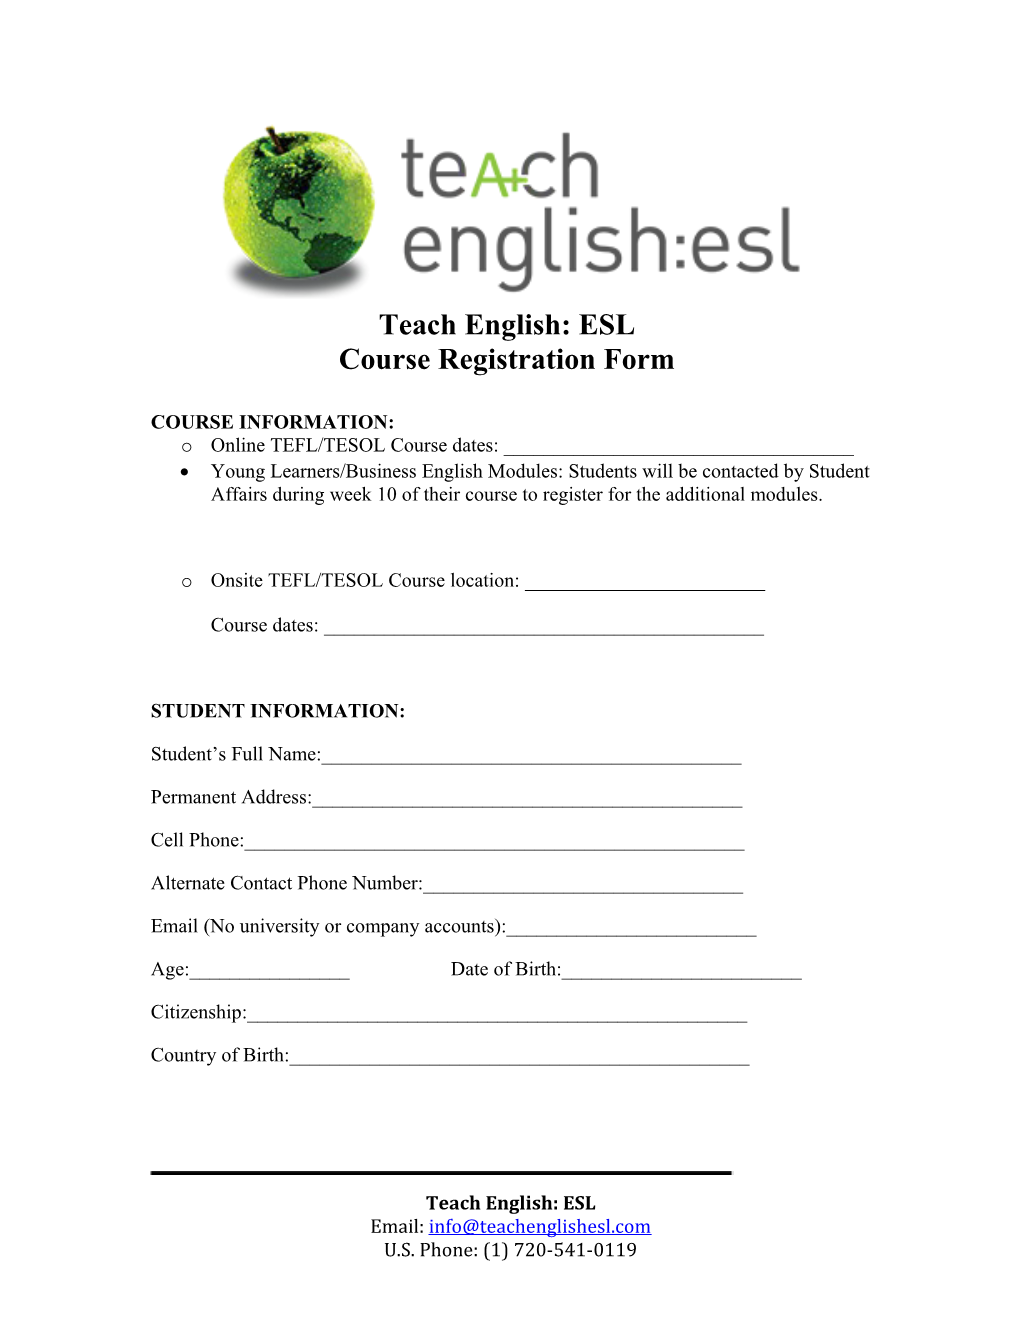 Teach English: ESL s1